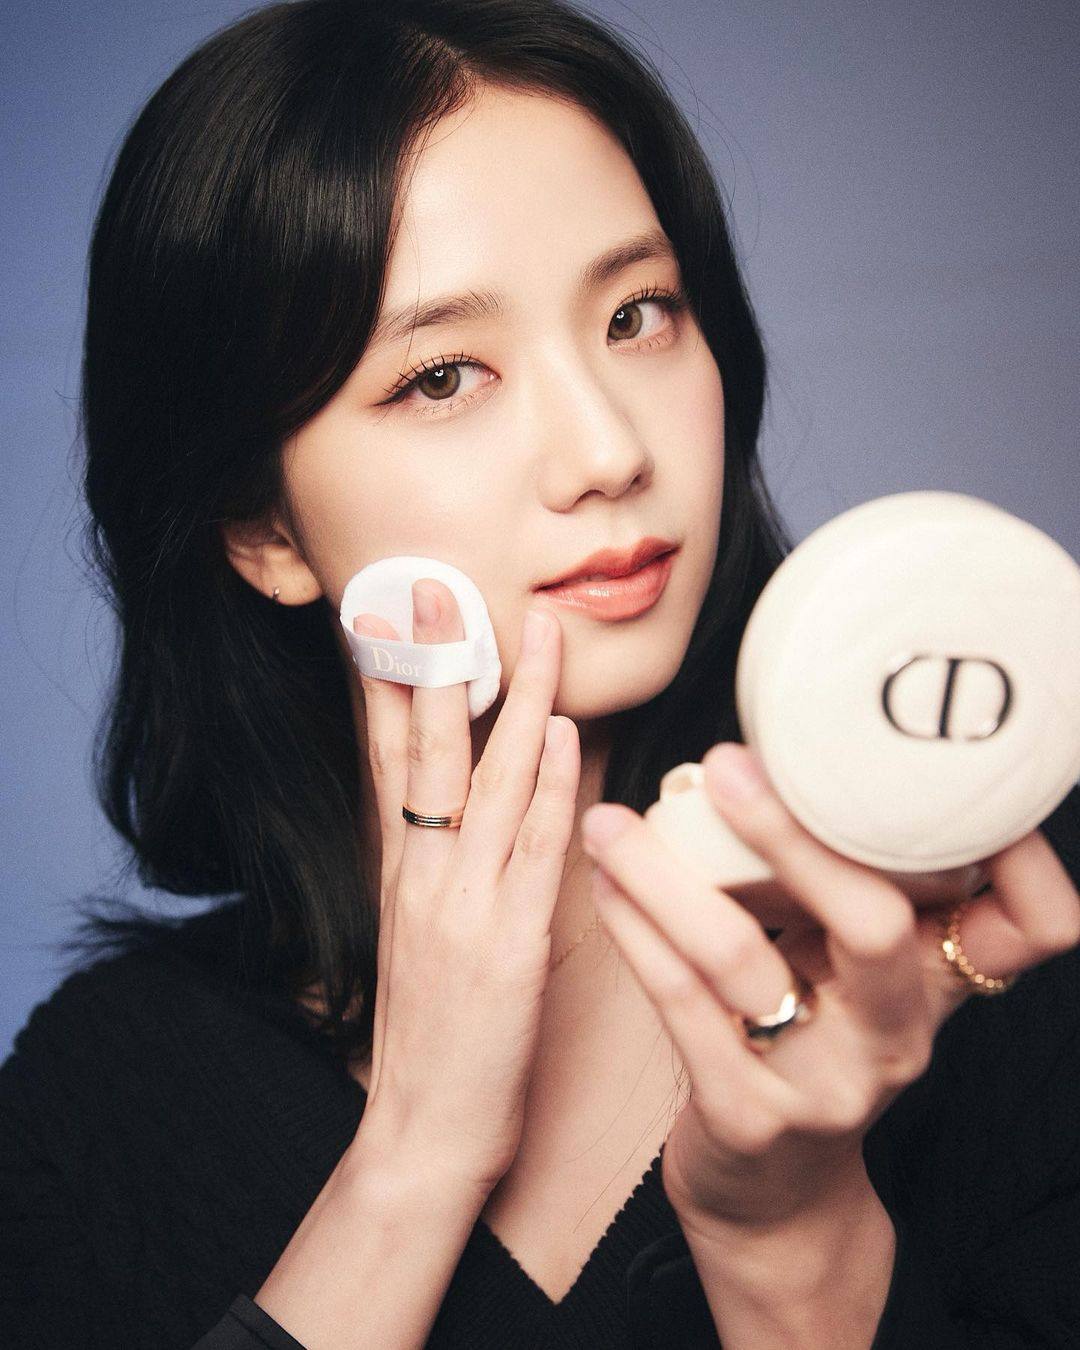 Blackpink’s Jisoo keeping her eyeliner super subtle in this shoot for Dior Beauty. Photo: @sooyaaa__/Instagram